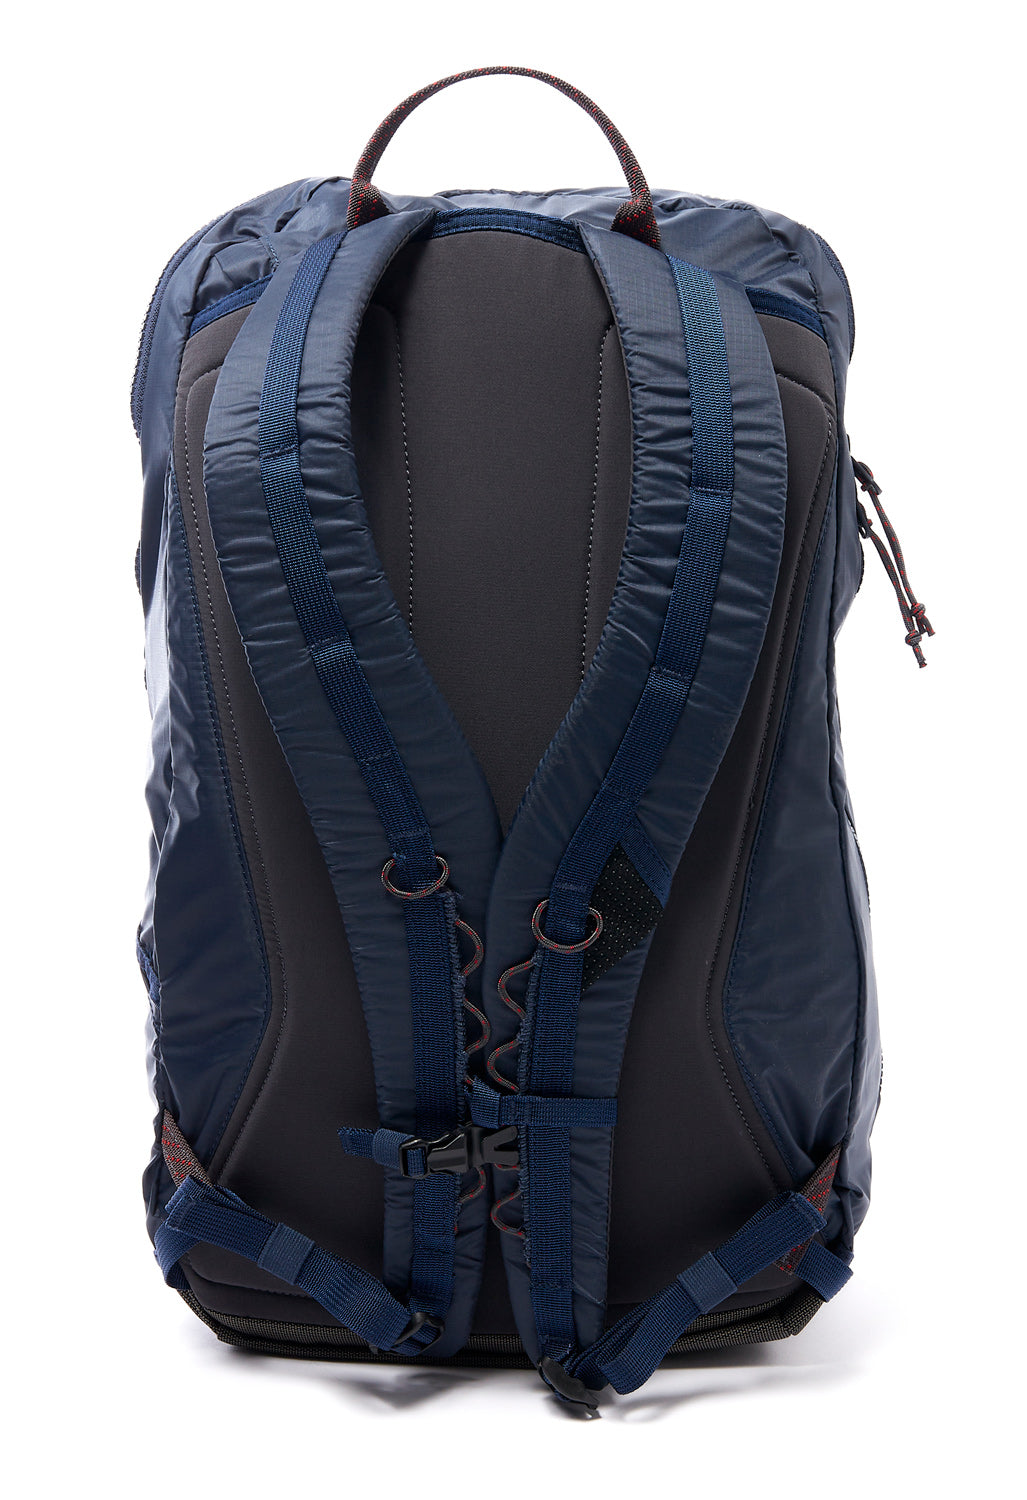 Klattermusen Gjalp Backpack 18L - Indigo Blue